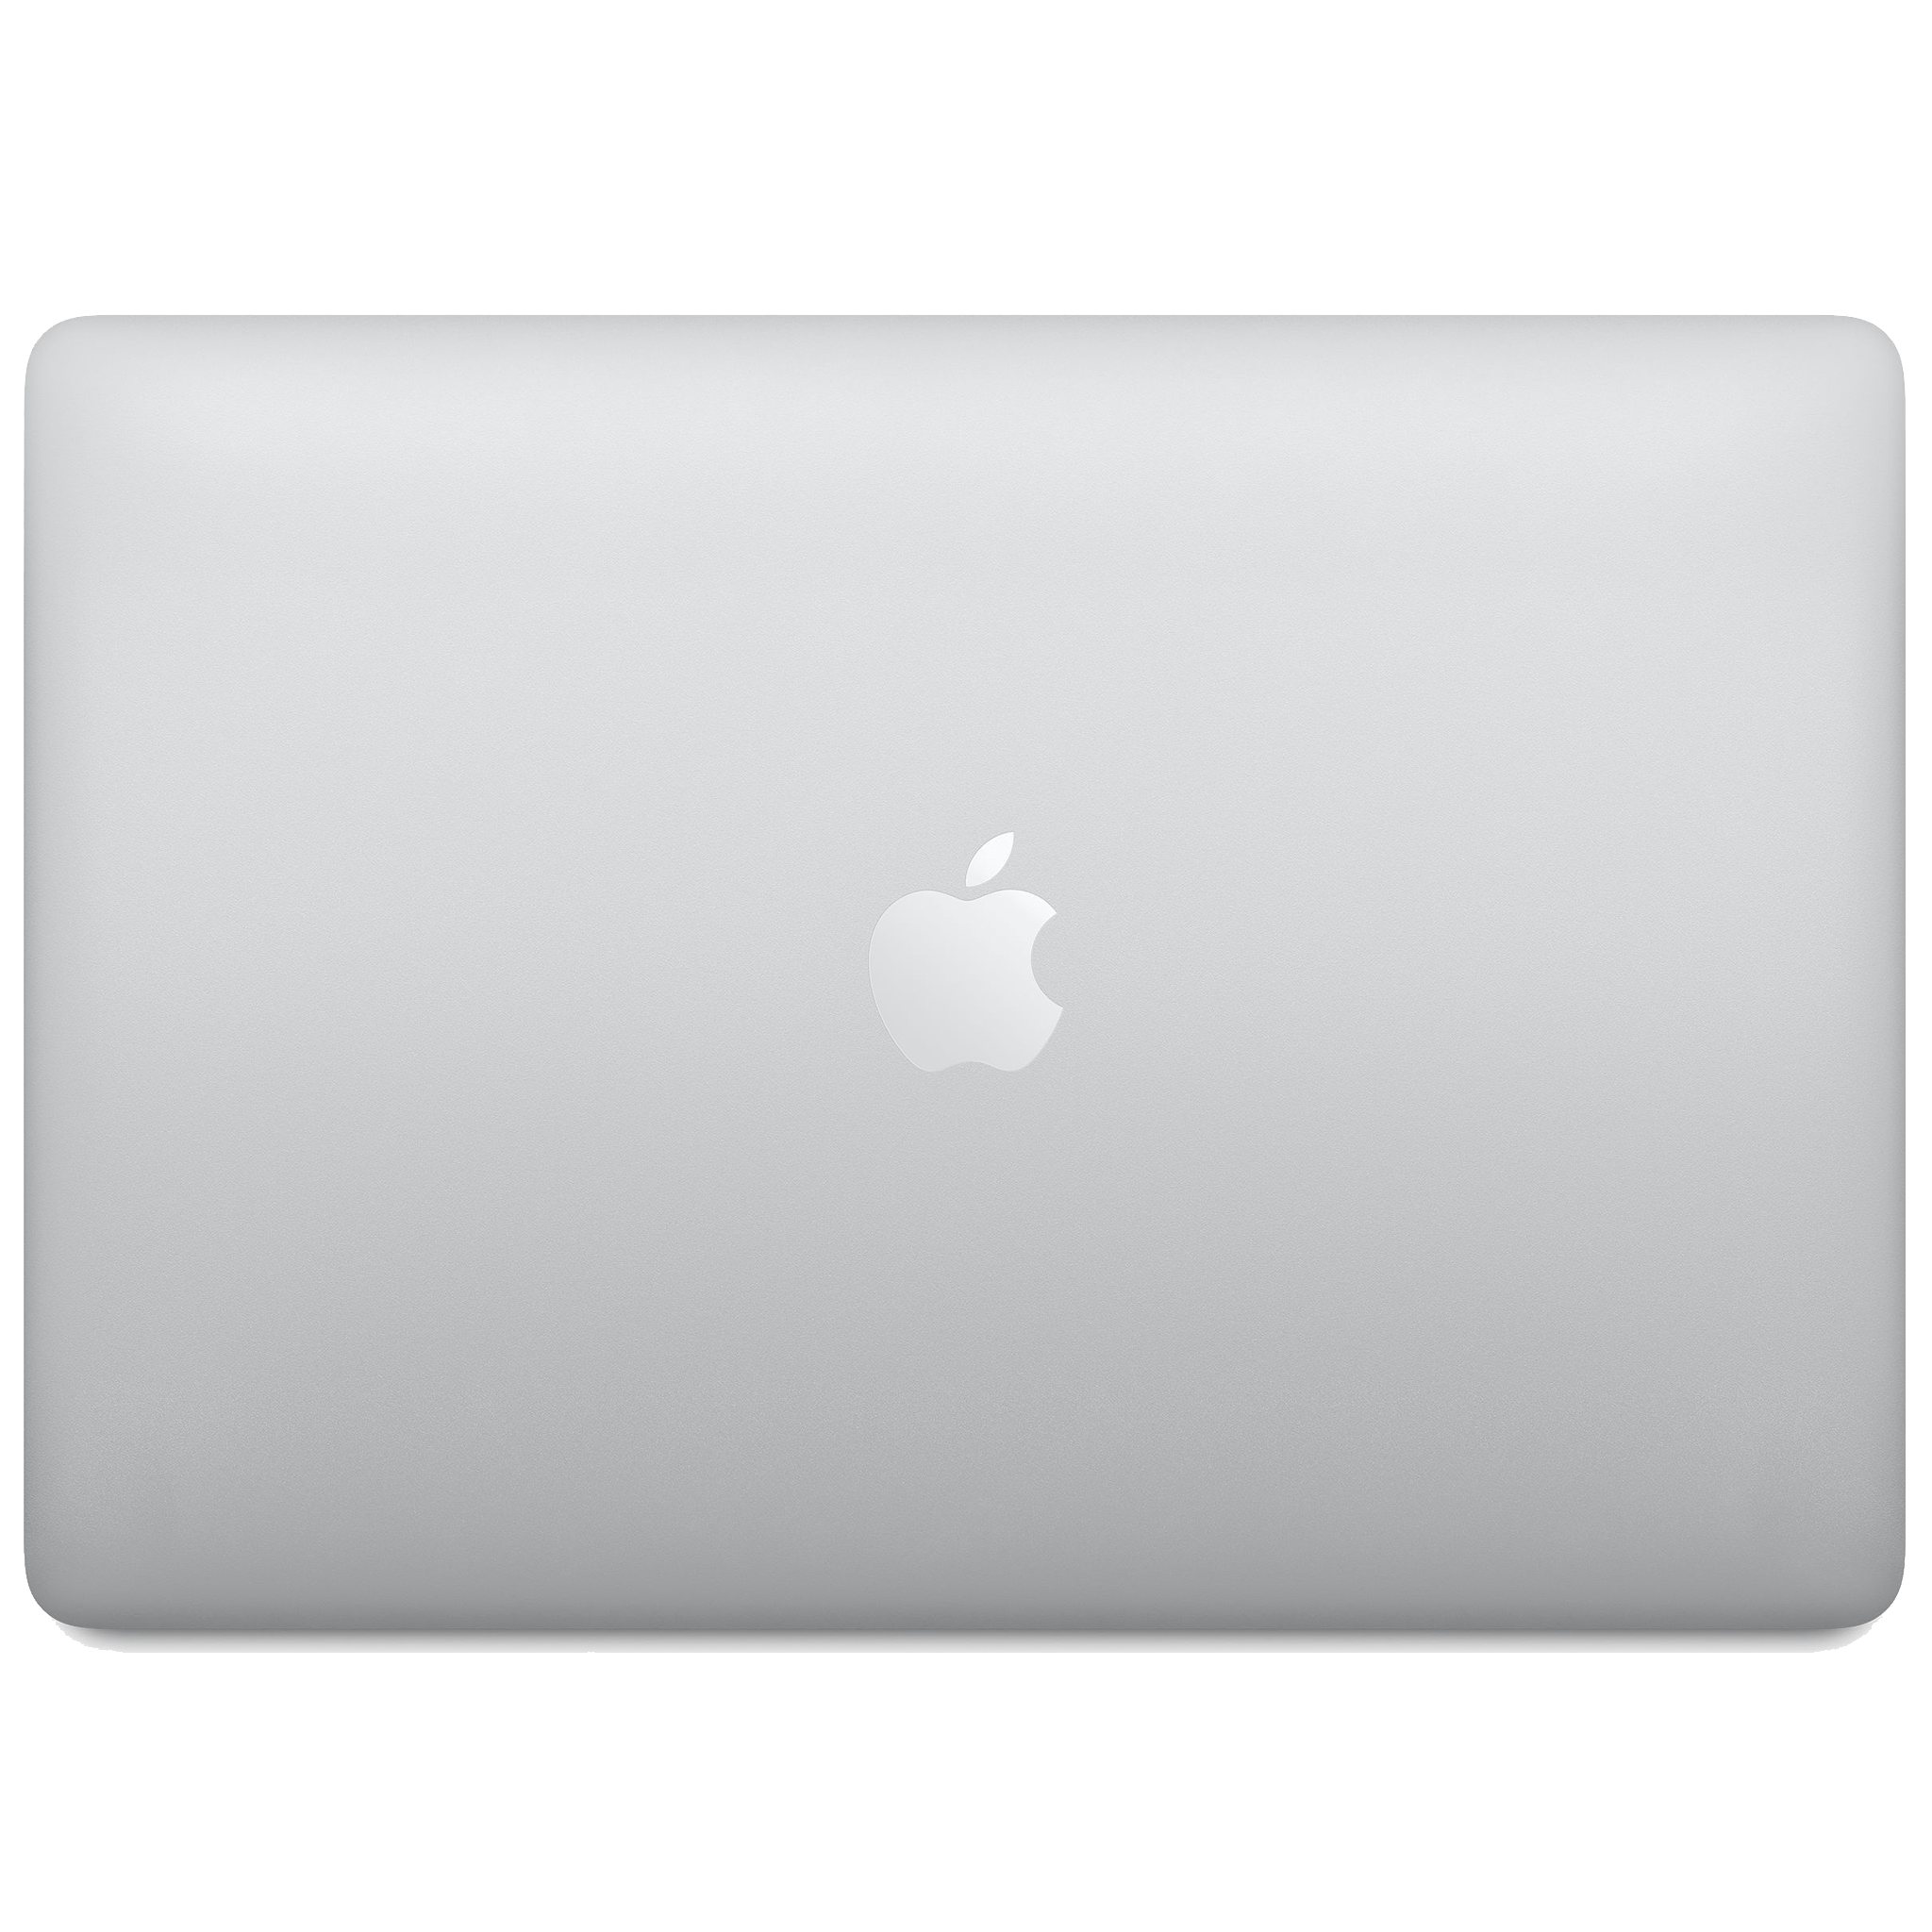 MacBook Pro 13.3-inch Laptop 2.5GHz i7 16GB RAM 1TB SSD - Silver (2017)